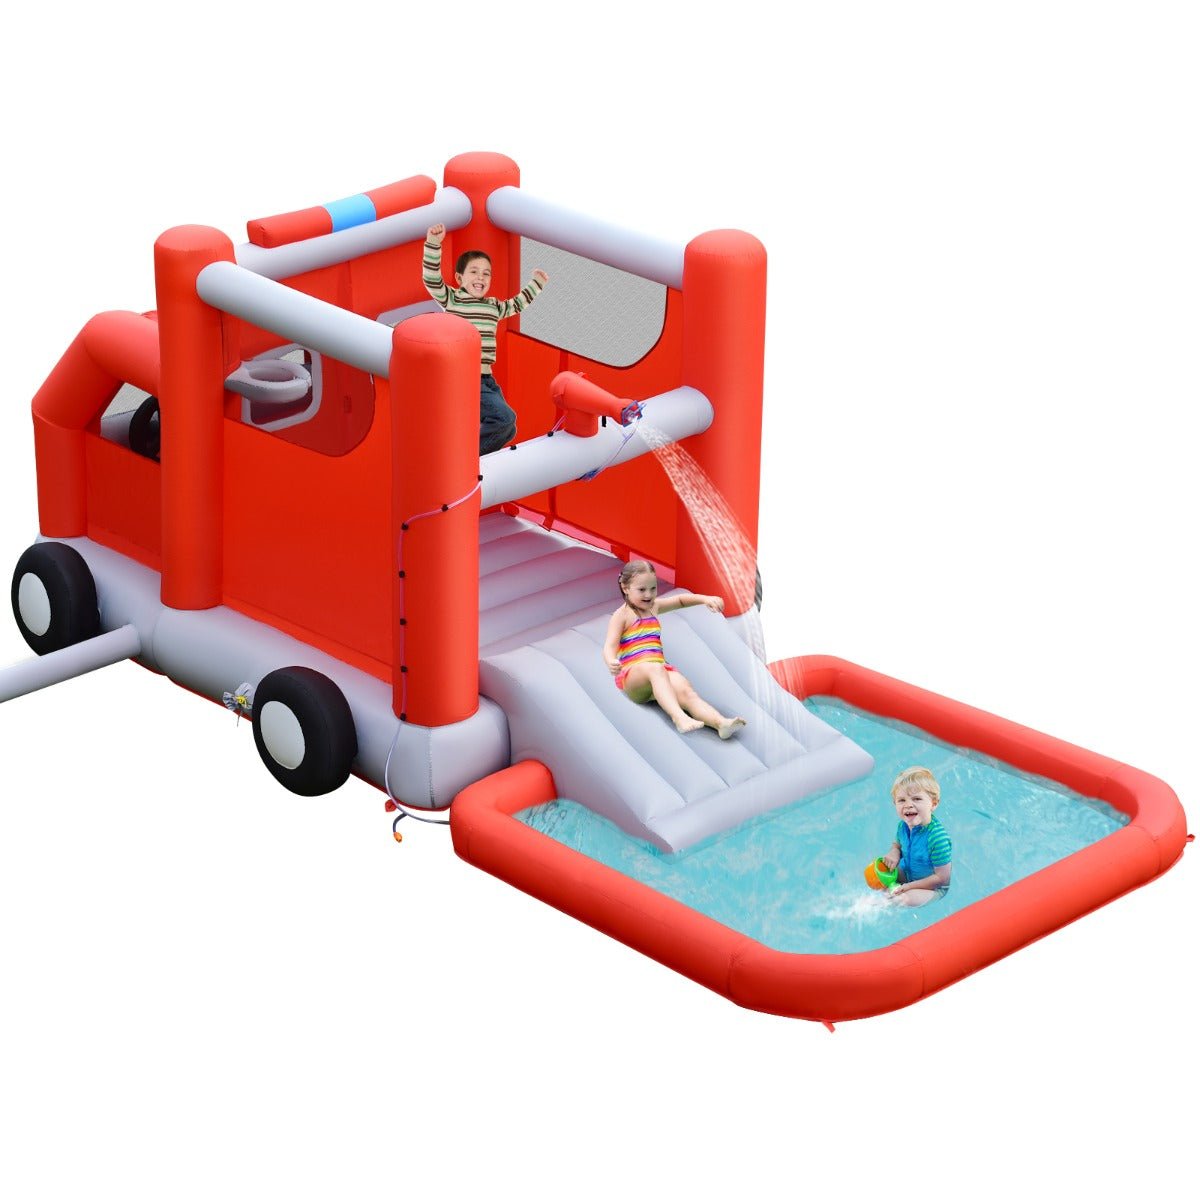 Firefighting-Themed Kids Water Slide - Splash into Fun and Adventure